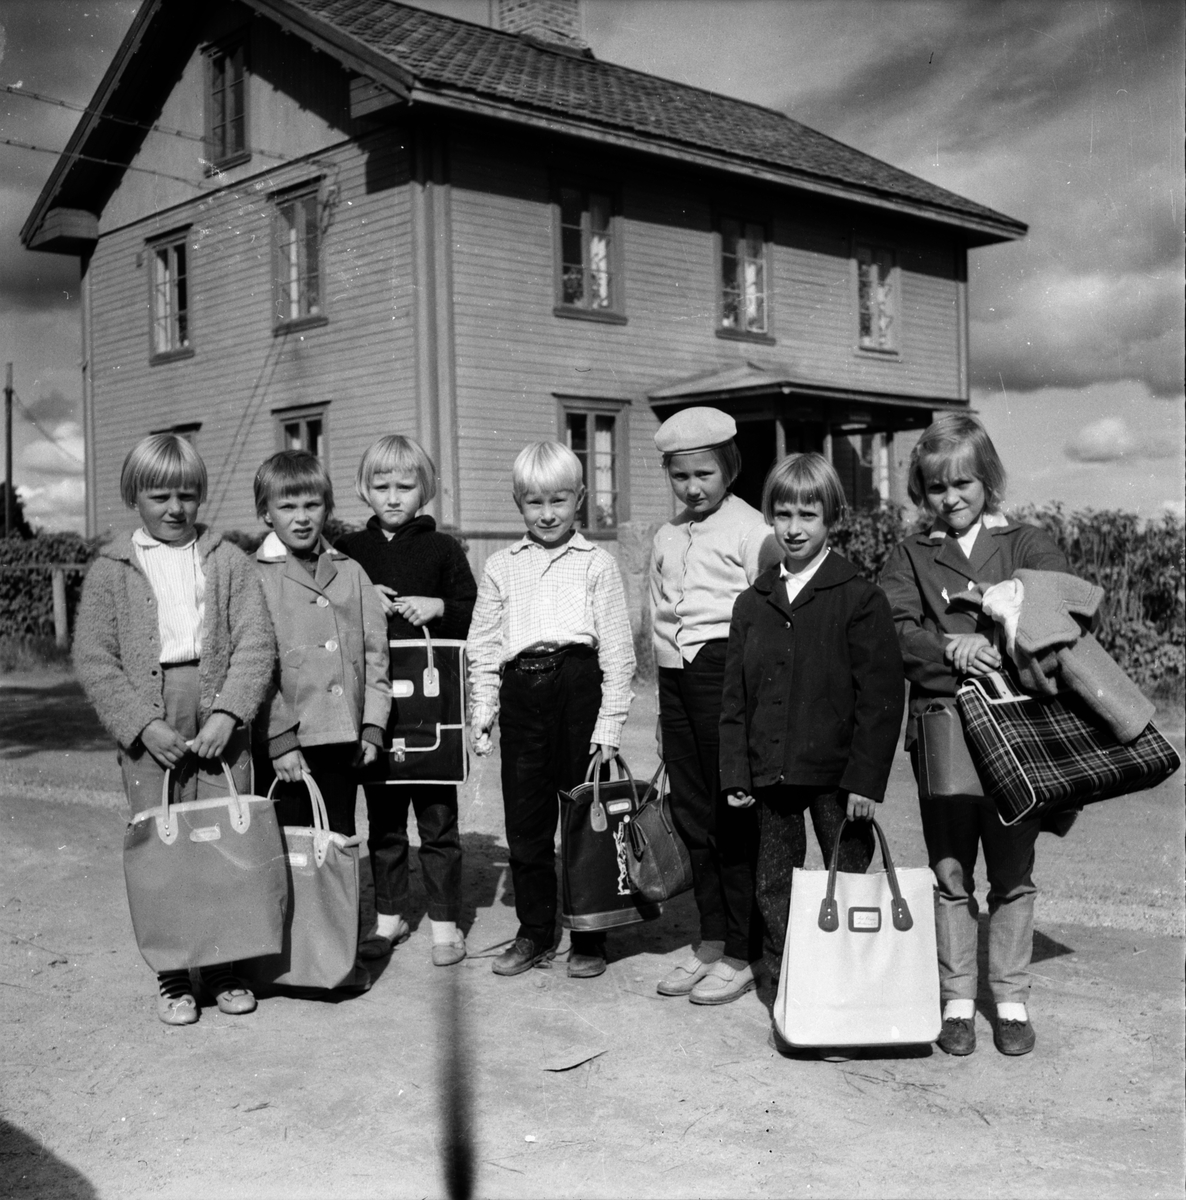 Lingon, Väg. Jordbruk, Skola
Lingbo 2/9 1960
